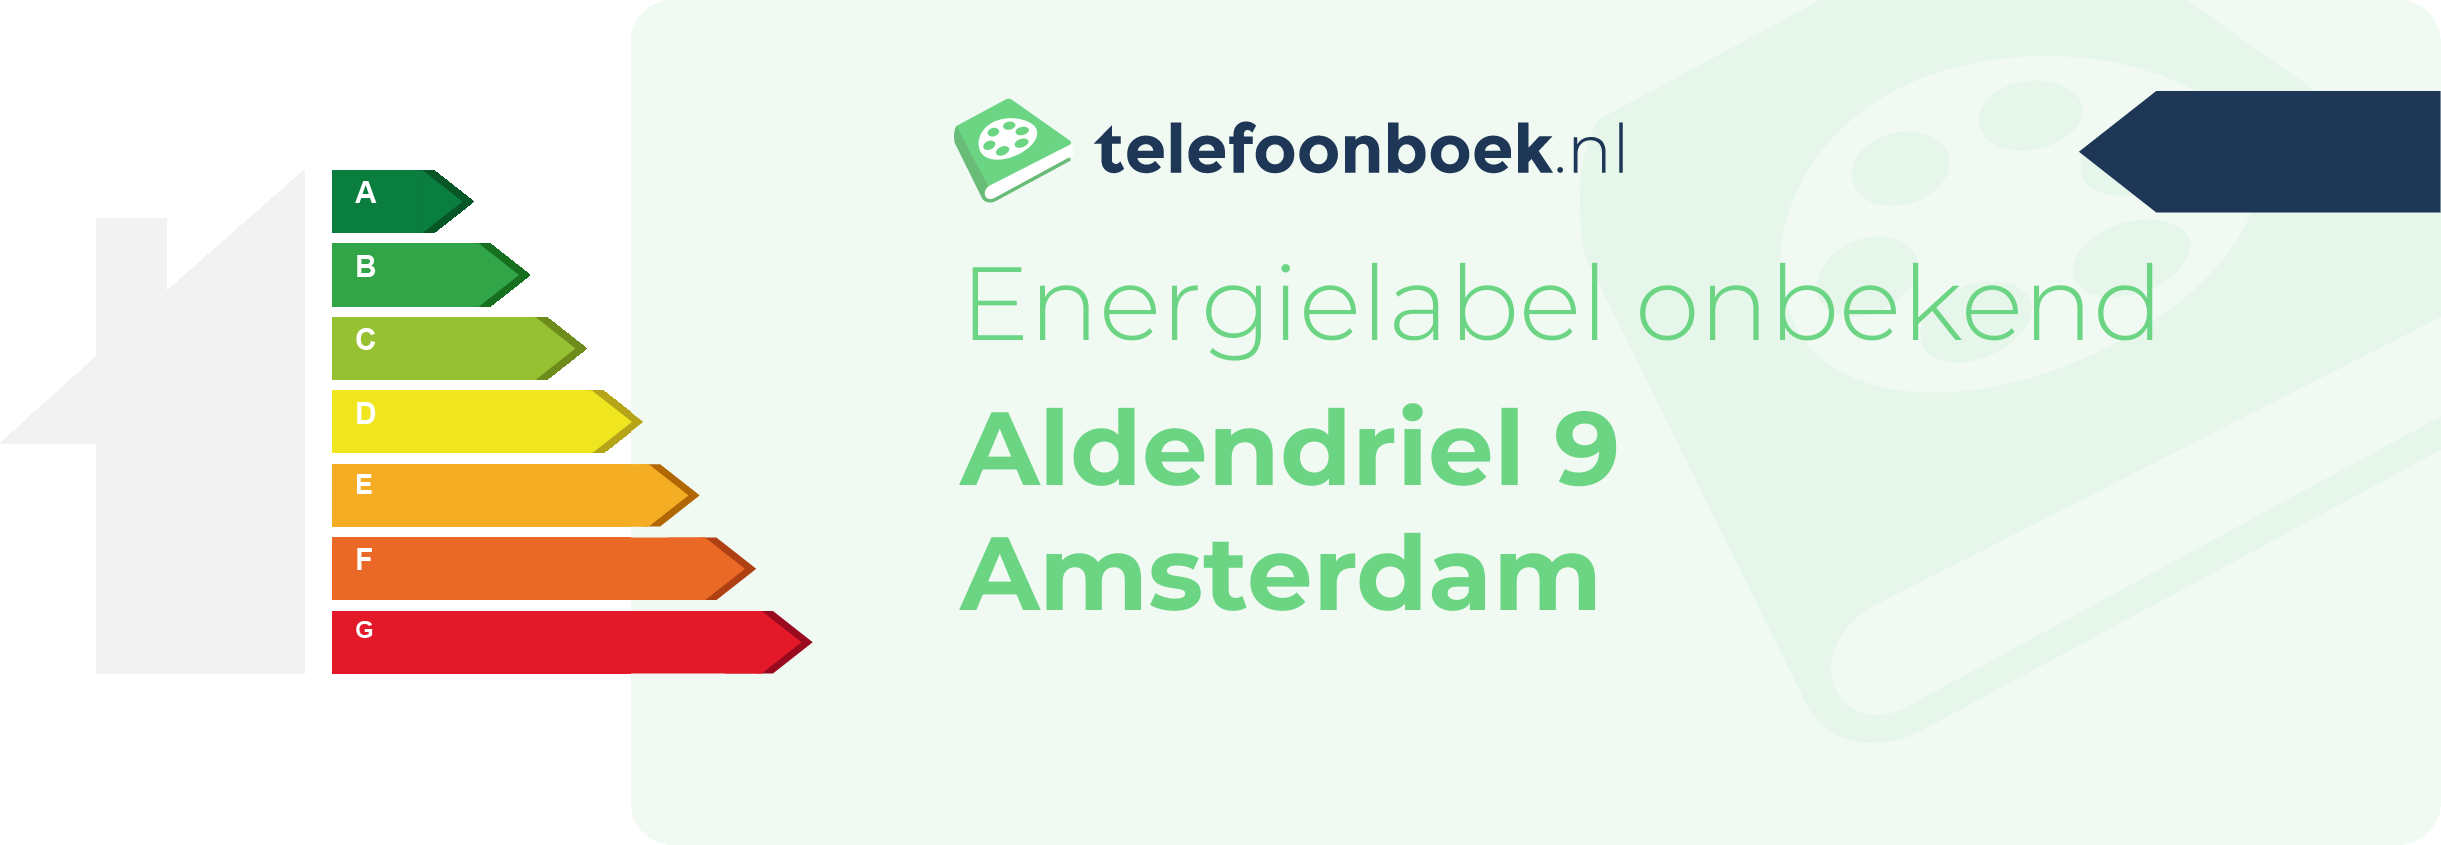 Energielabel Aldendriel 9 Amsterdam